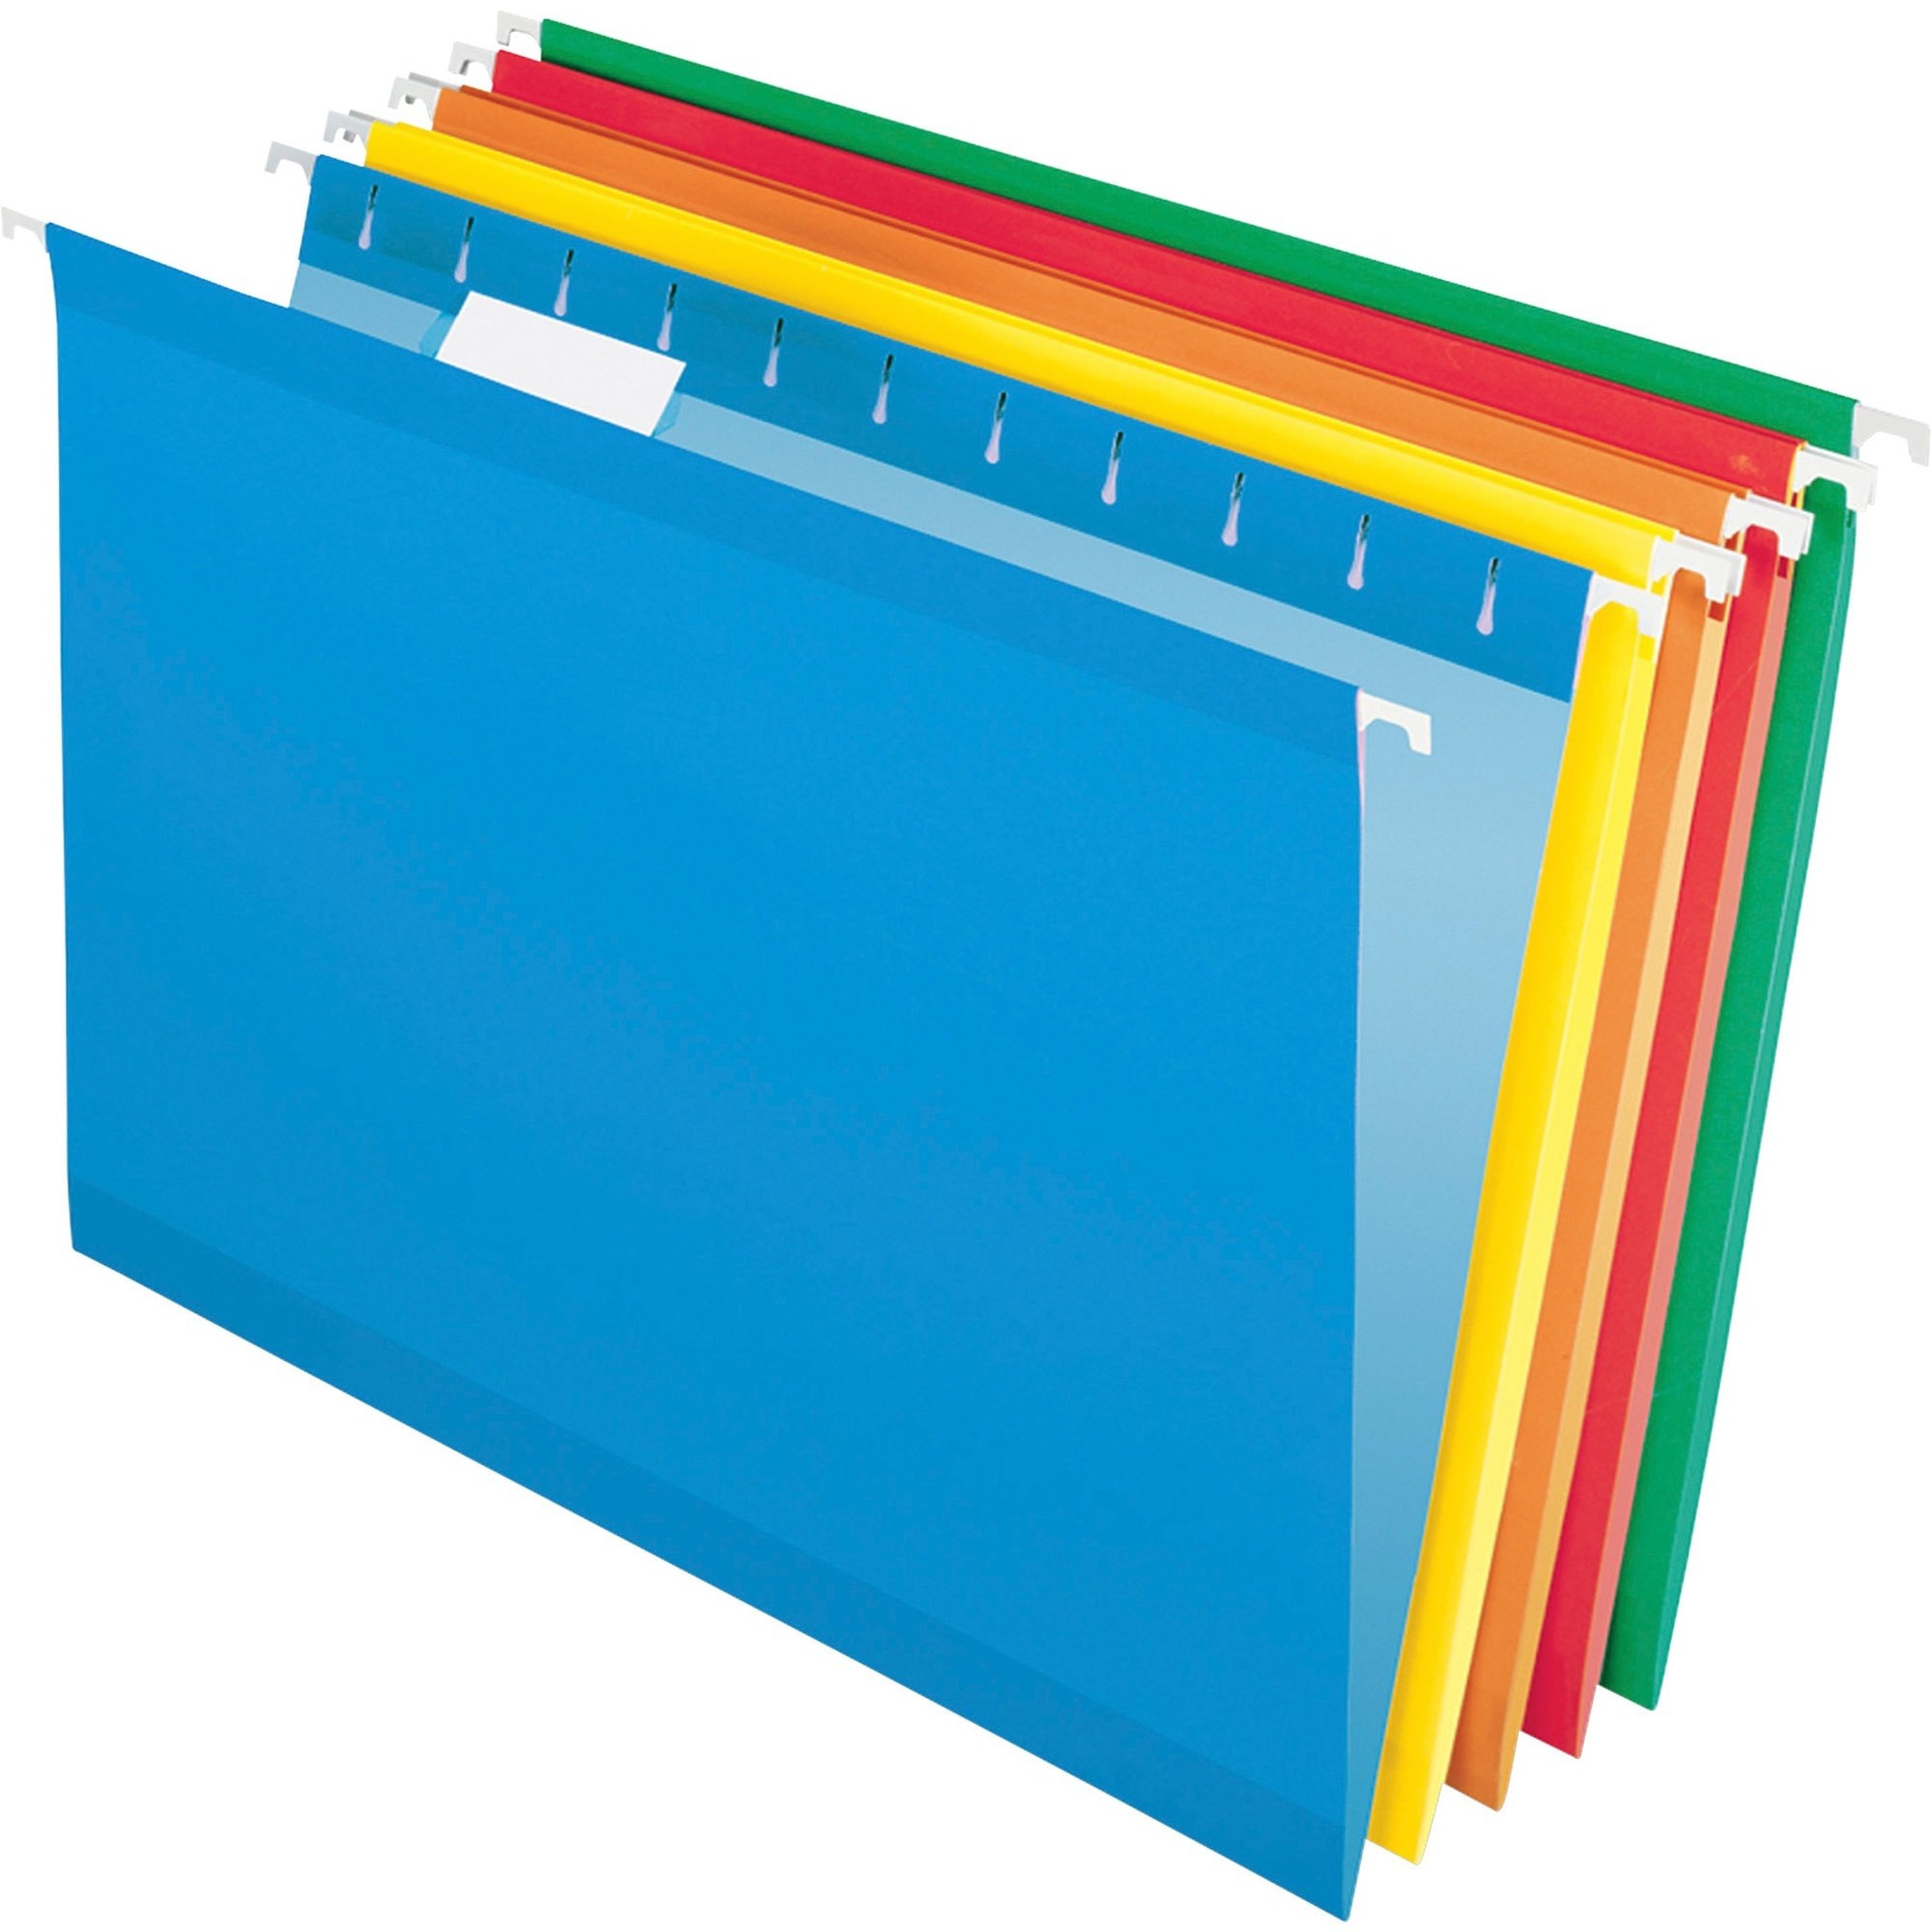 Pendaflex 1/5 Tab Cut Legal Recycled Hanging Folder - 8 1/2" x 14" - Blue, Red, Yellow, Orange, Green - 10% Recycled - 25 / Box